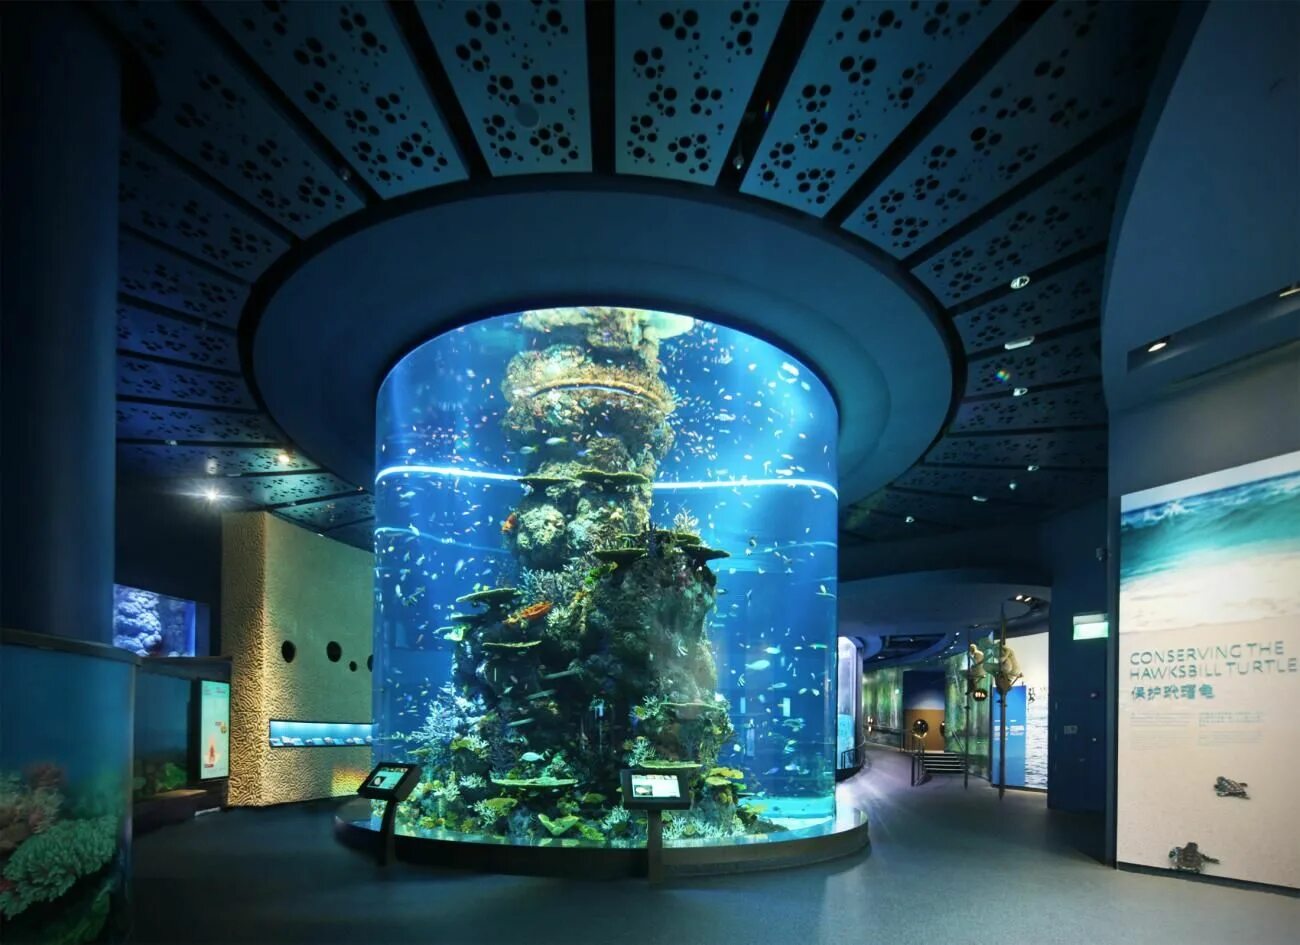 Marine aquarium. Marine Life Park, Сингапур. Сингапур Сентоза океанариум. Океанариум в Сингапуре s.e.a. Aquarium. Сентоза парк морская жизнь Сингапур.